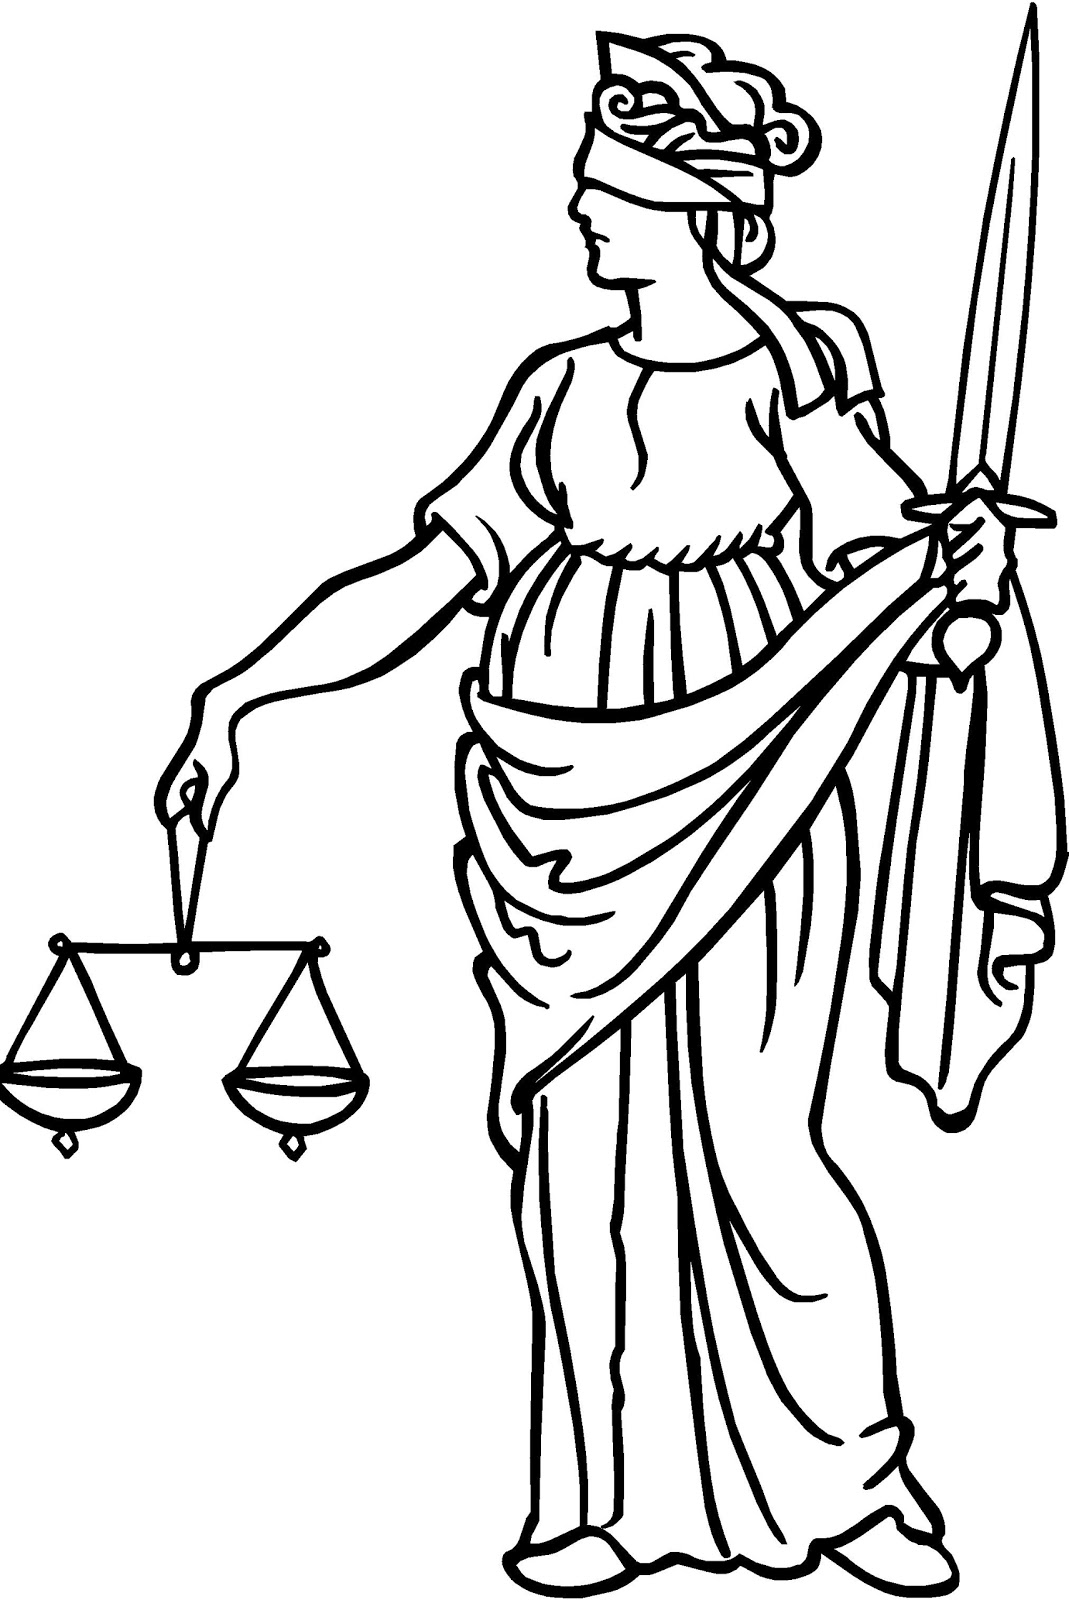 lady-justice2